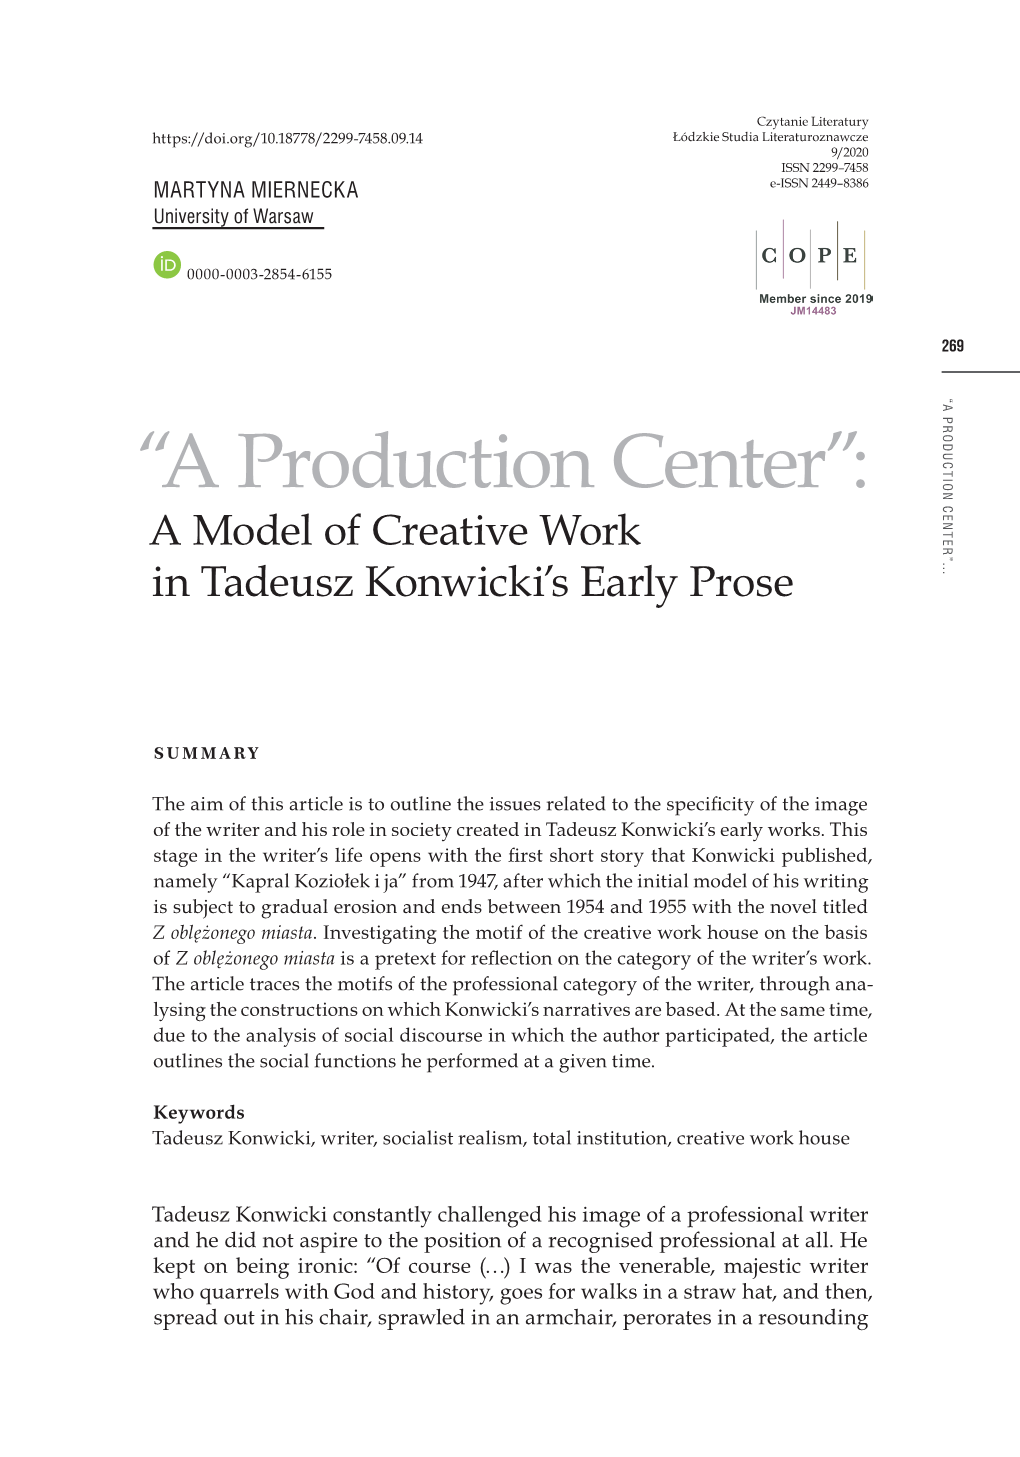 A Model of Creative Work in Tadeusz Konwicki's Early Prose